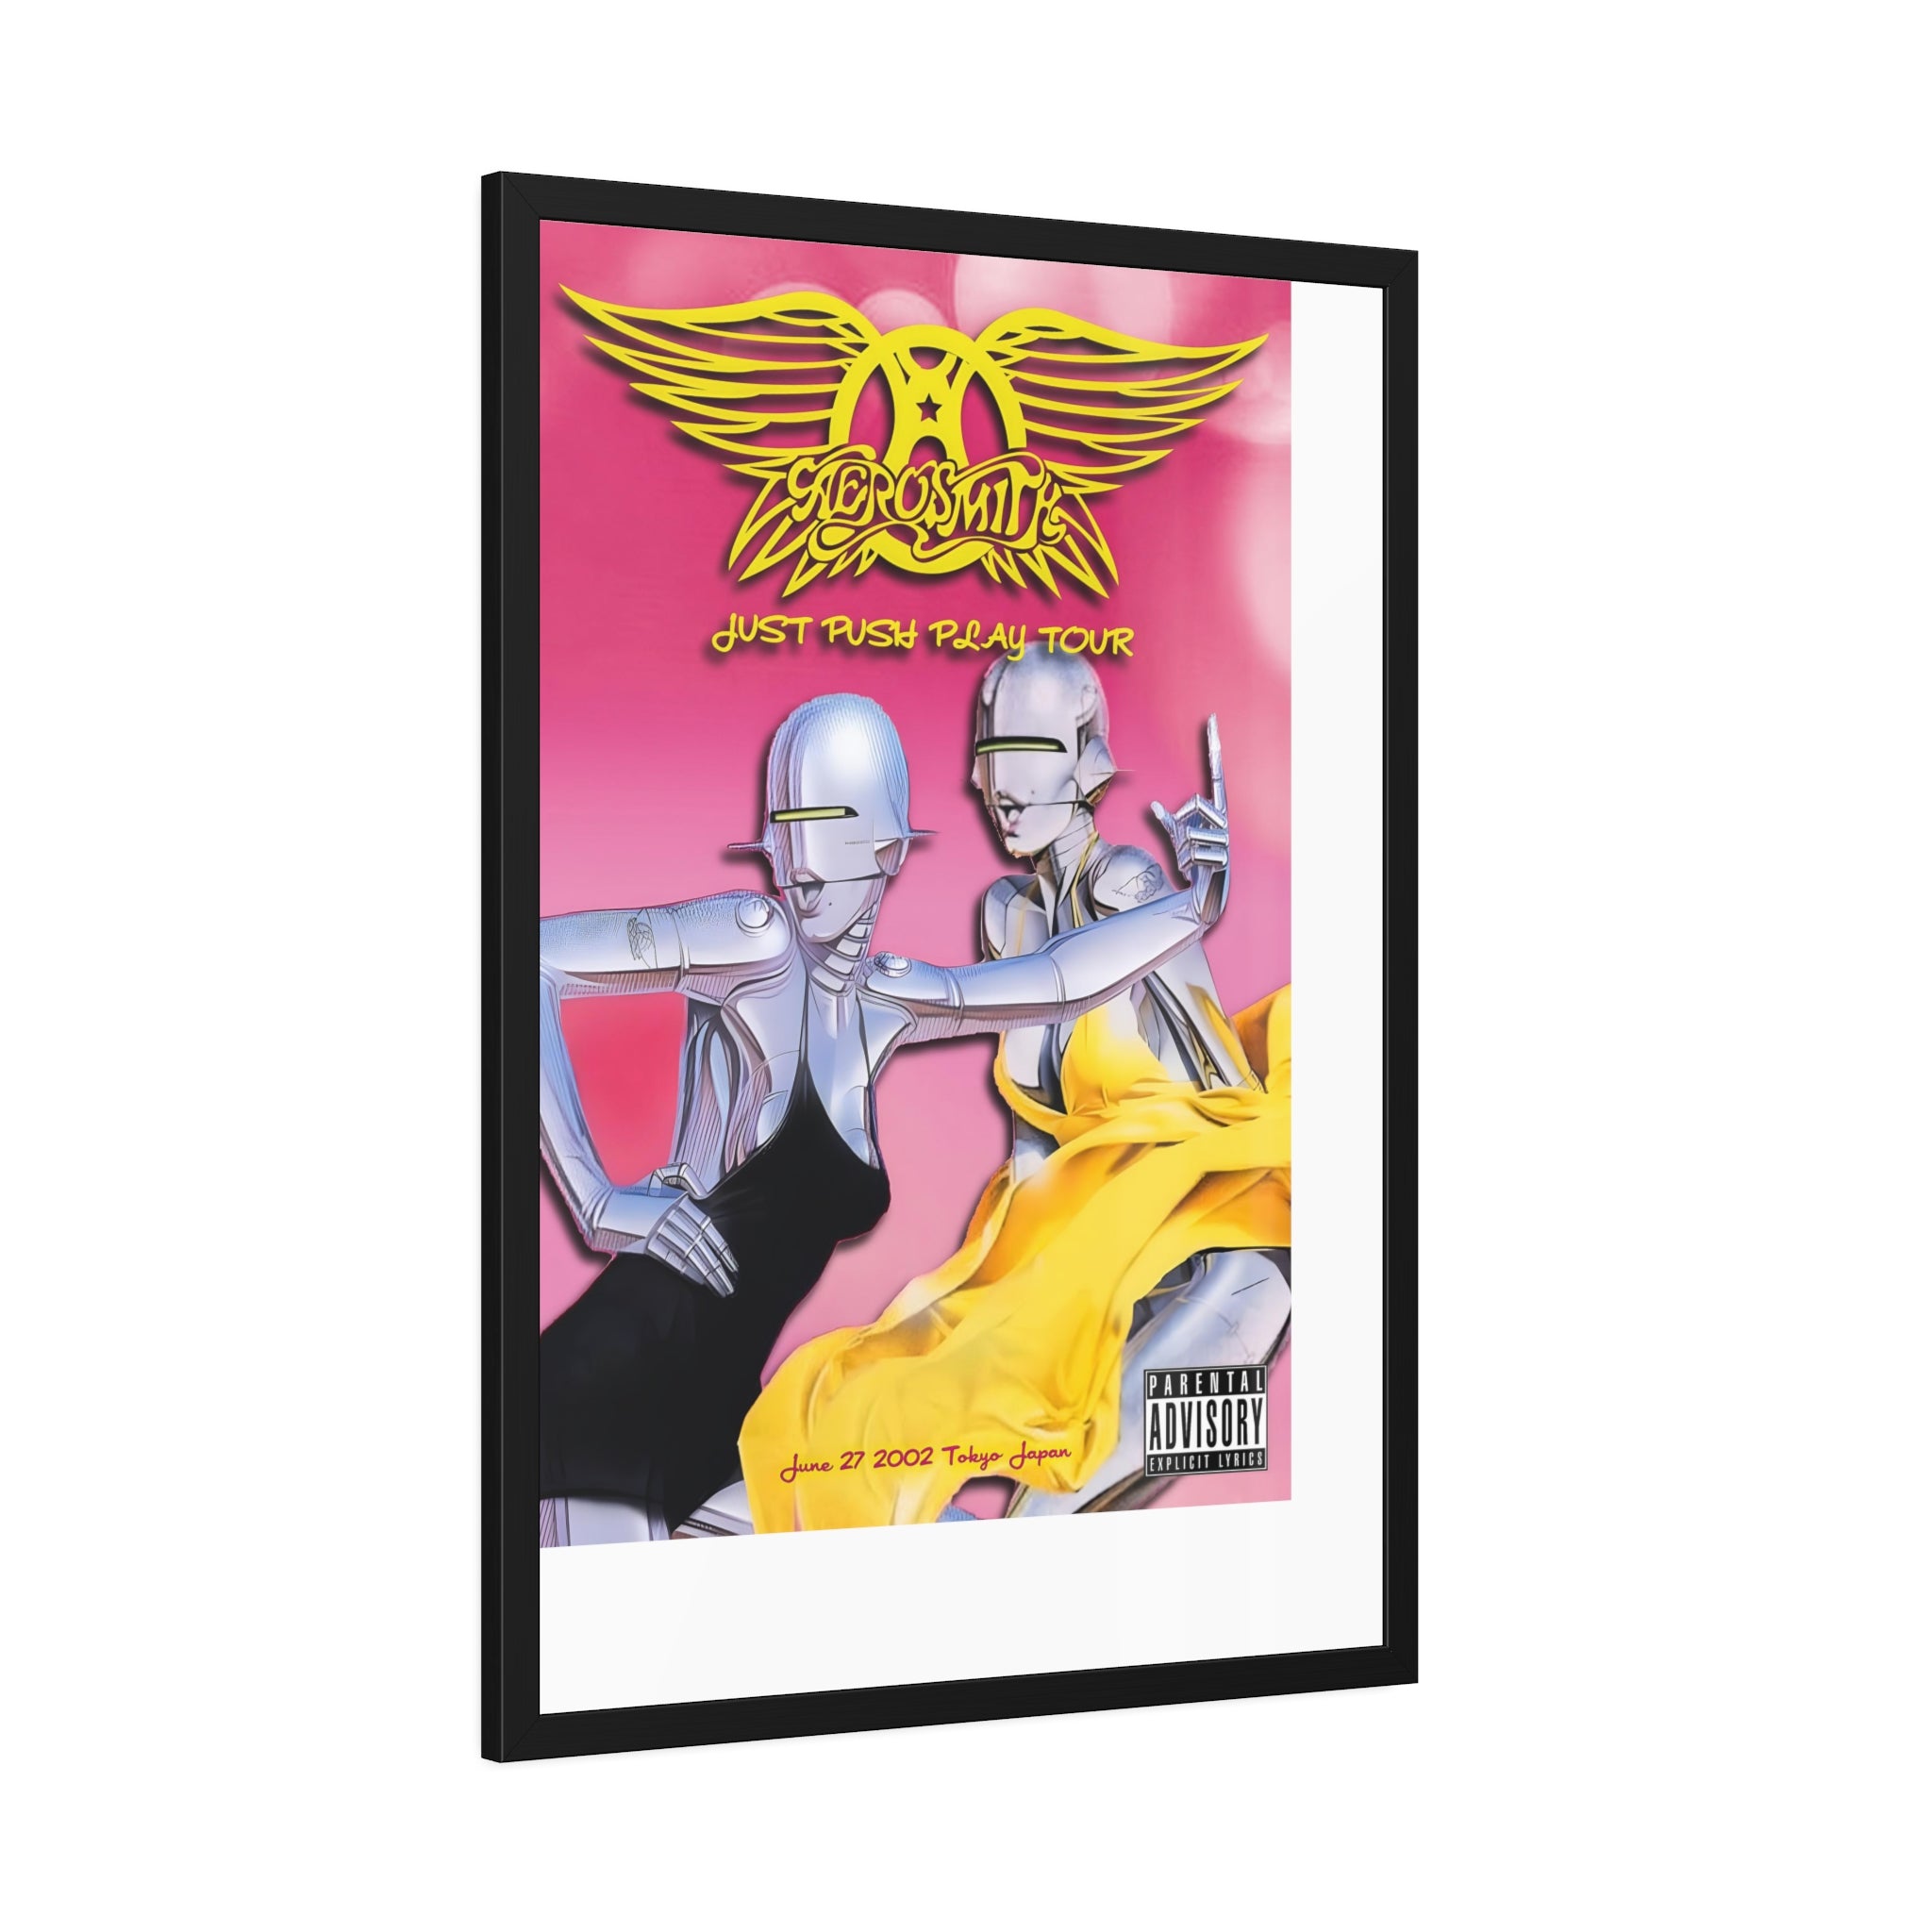 Aerosmith Concert Poster IV